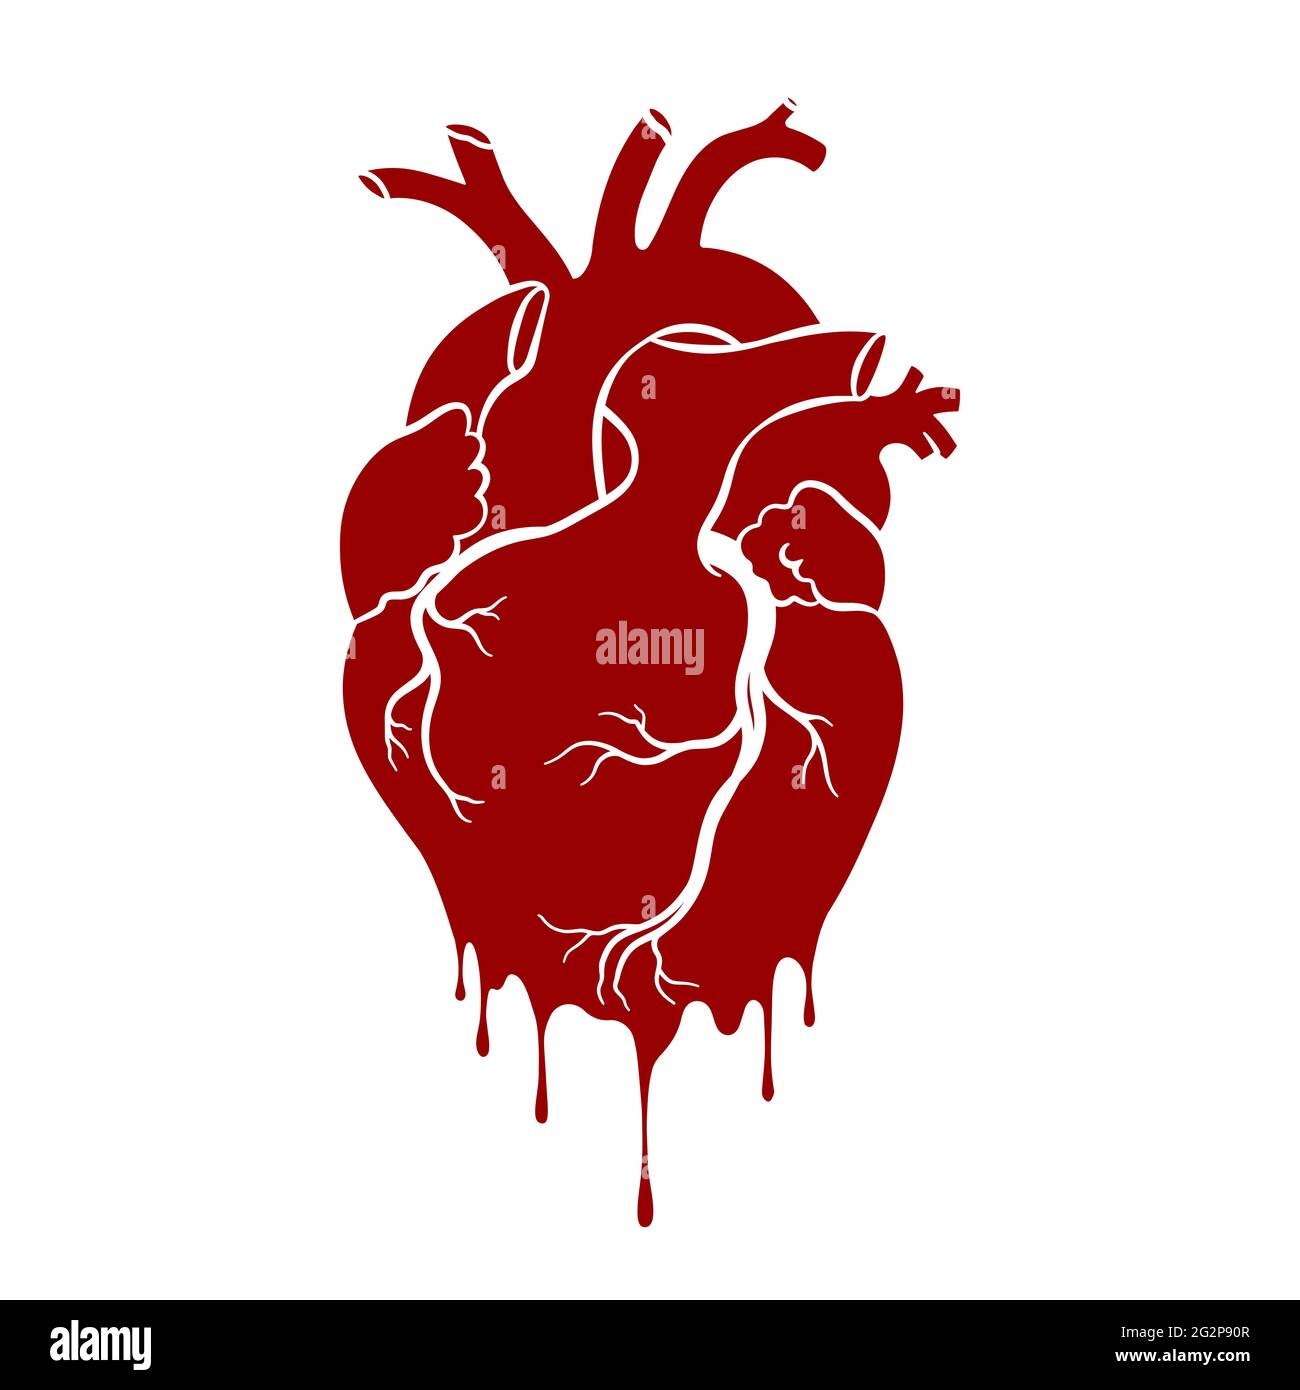 https://c8.alamy.com/comp/2G2P90R/human-heart-anatomical-realistic-dripping-heart-line-art-vector-illustration-2G2P90R.jpg